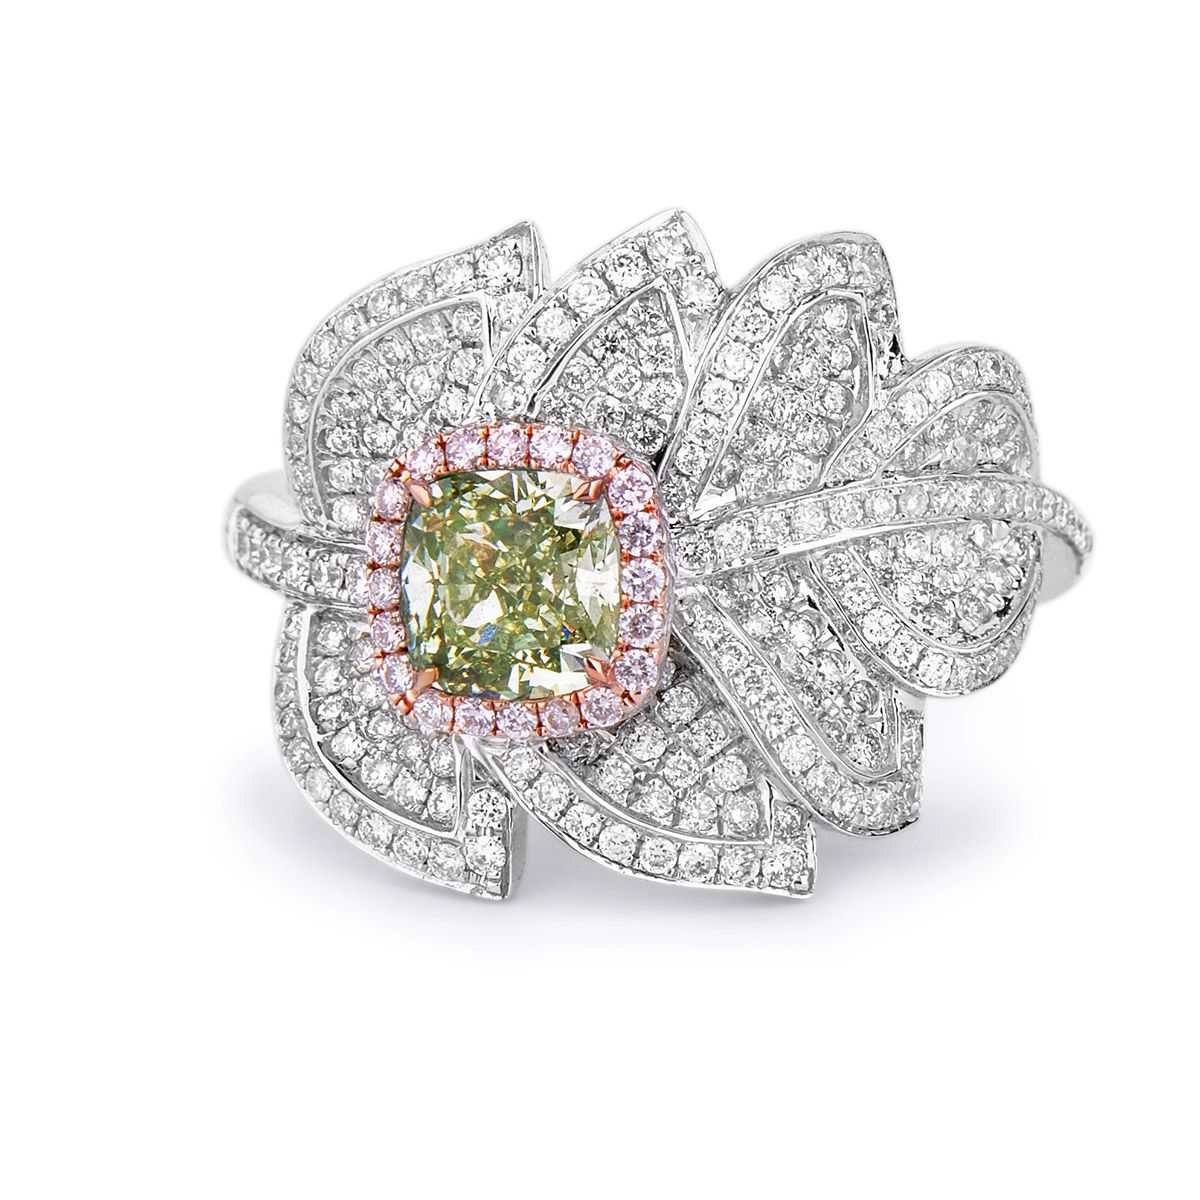 Fancy Light Greenish Yellow Diamond Ring, 1.44 Ct. TW, Cushion shape, GIA Certified, 6183308348